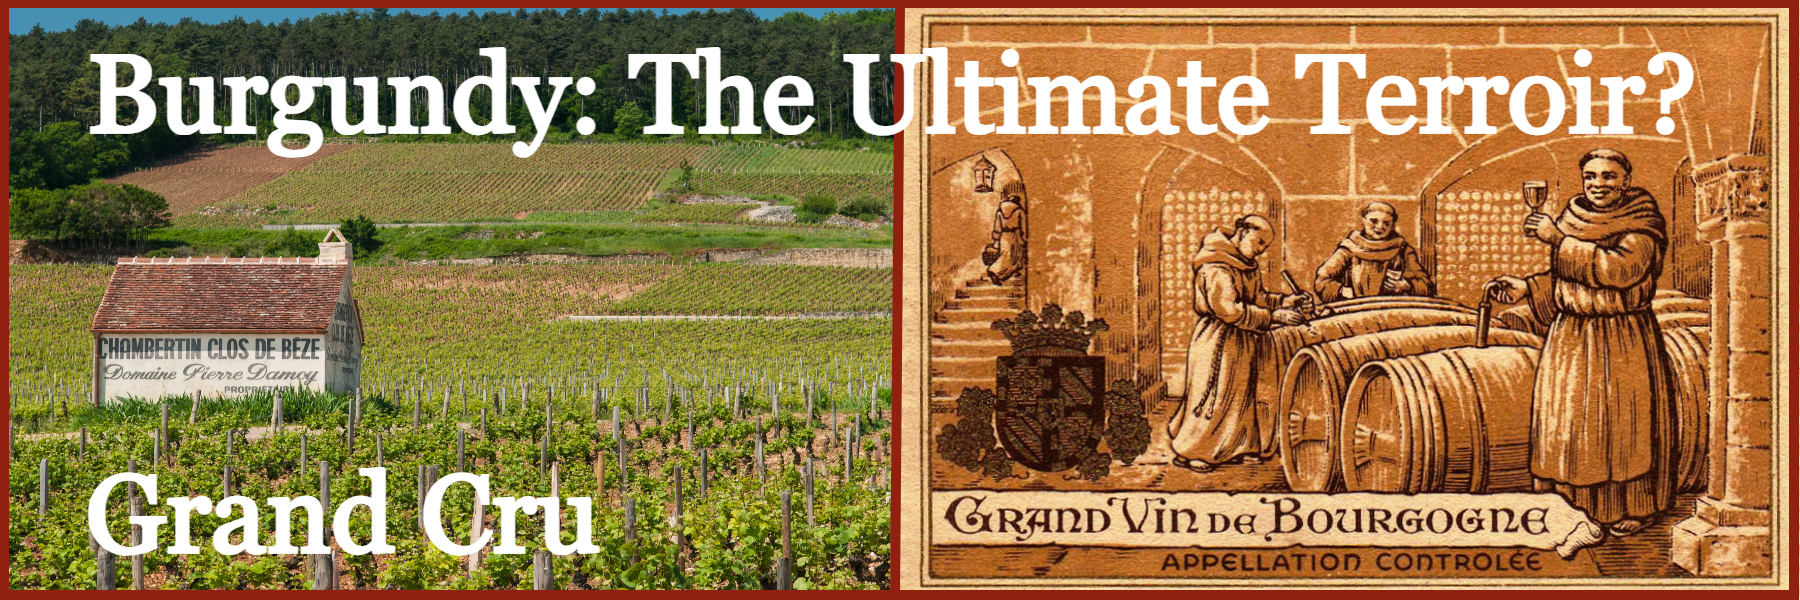 Burgundy: The ultimate terroir?